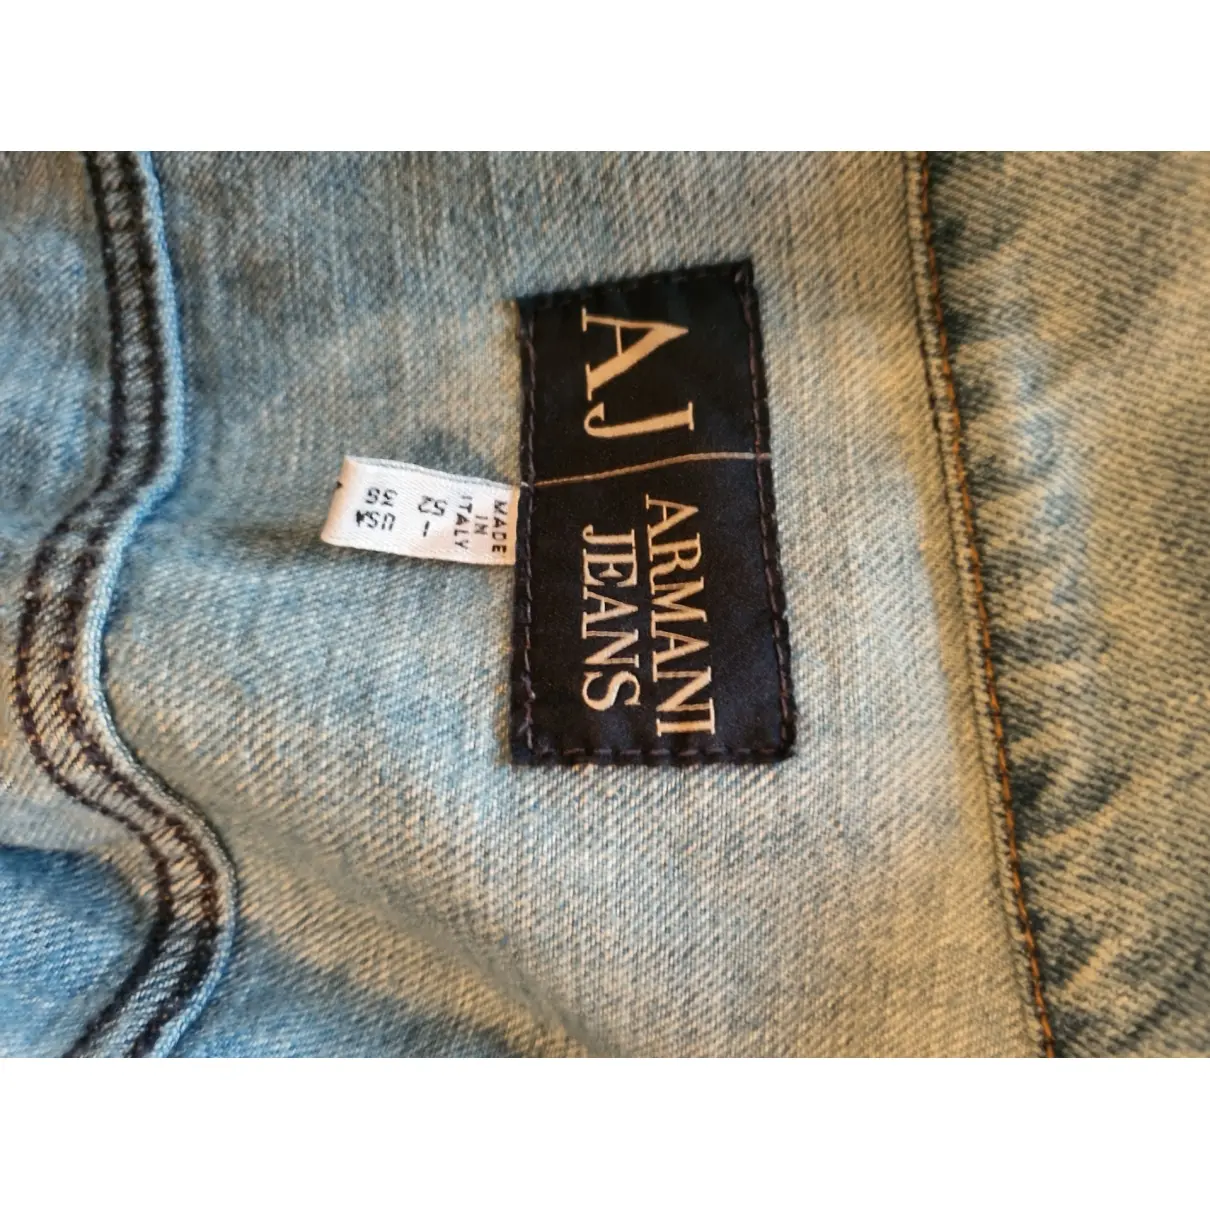 Buy Armani Jeans Jacket online - Vintage